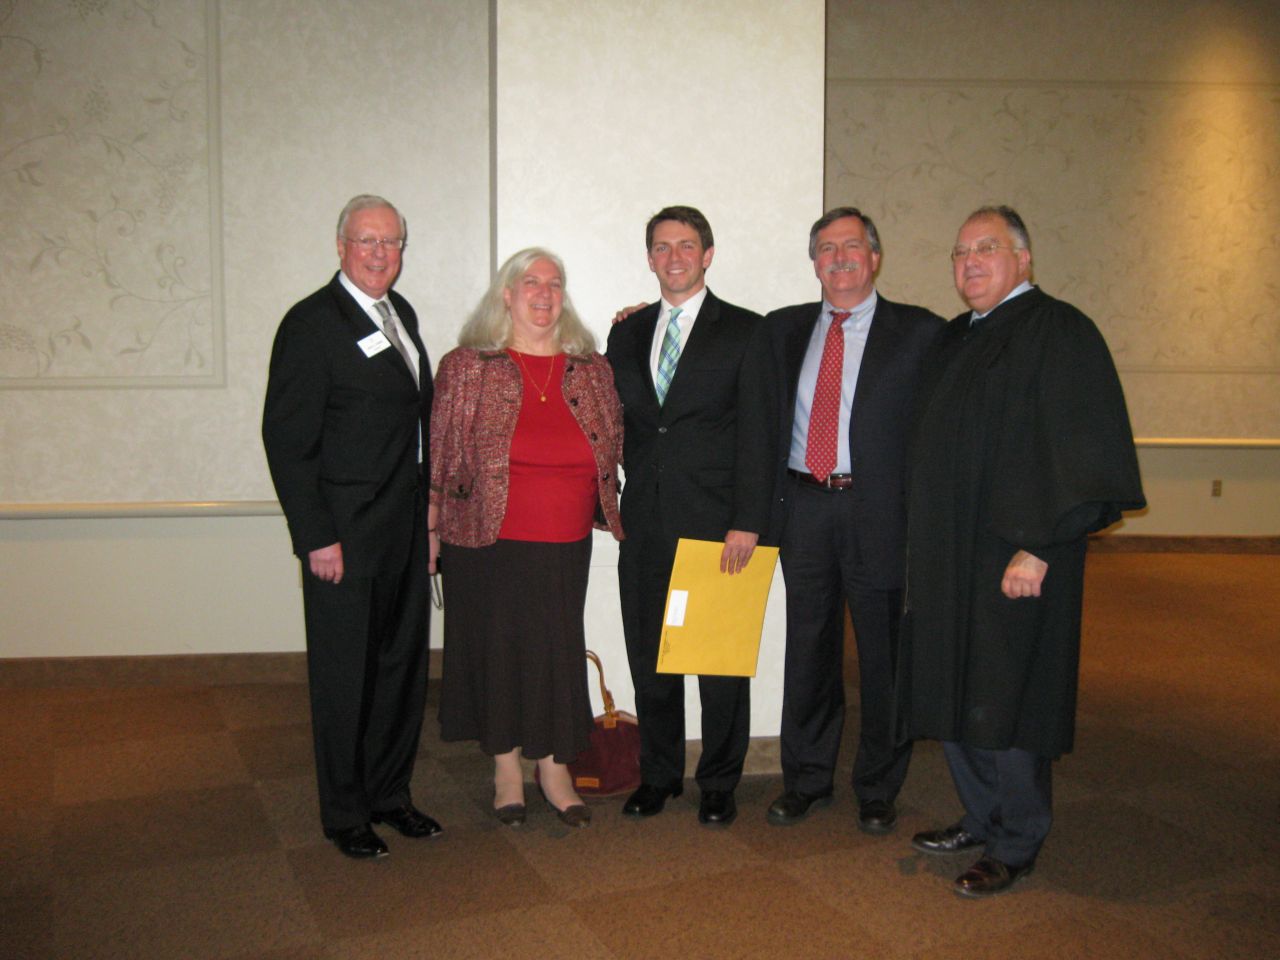 ISBA President John O'Brien, Deb Baron, her son, new admittee David Baron, his father, ISBA member Dennis Baron and Justice Robert L. Carter